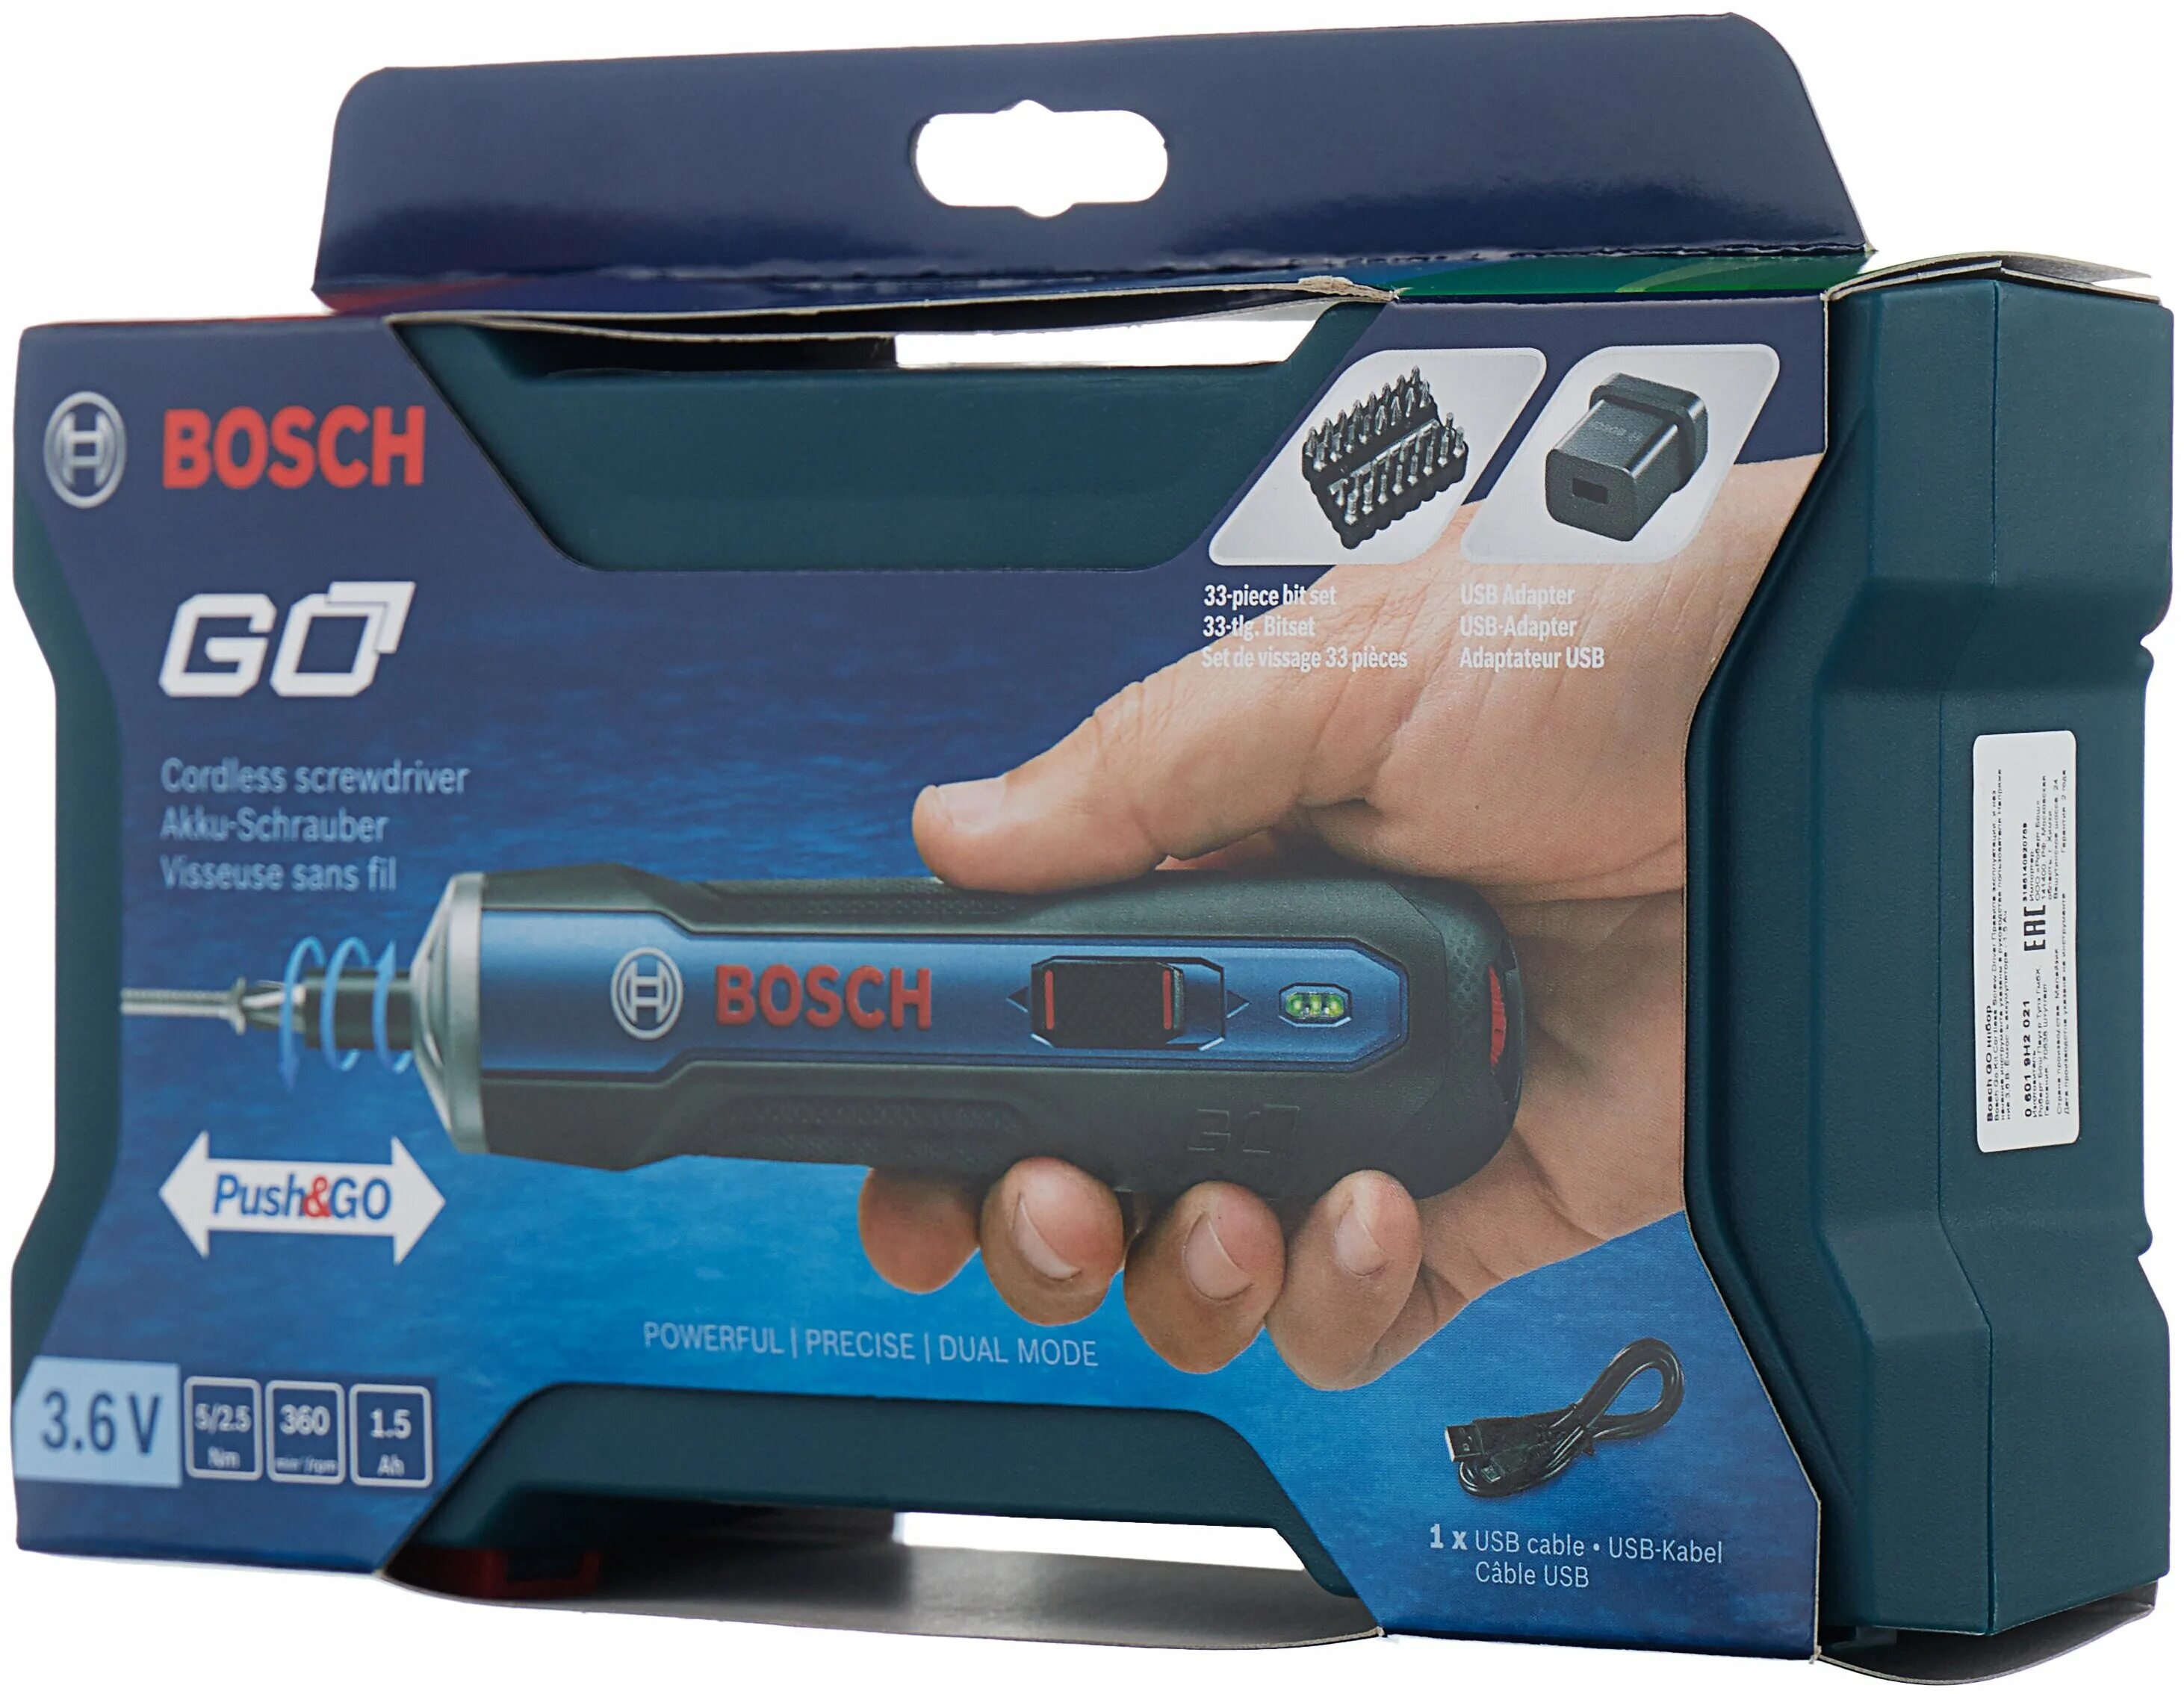 Гоу он купить. Отвертка аккумуляторная Bosch go Kit (06019h2021). Bosch go Kit 06019h2021. Электроотвертка Bosch go Kit. Bosch отвертка аккумуляторная Bosch go.